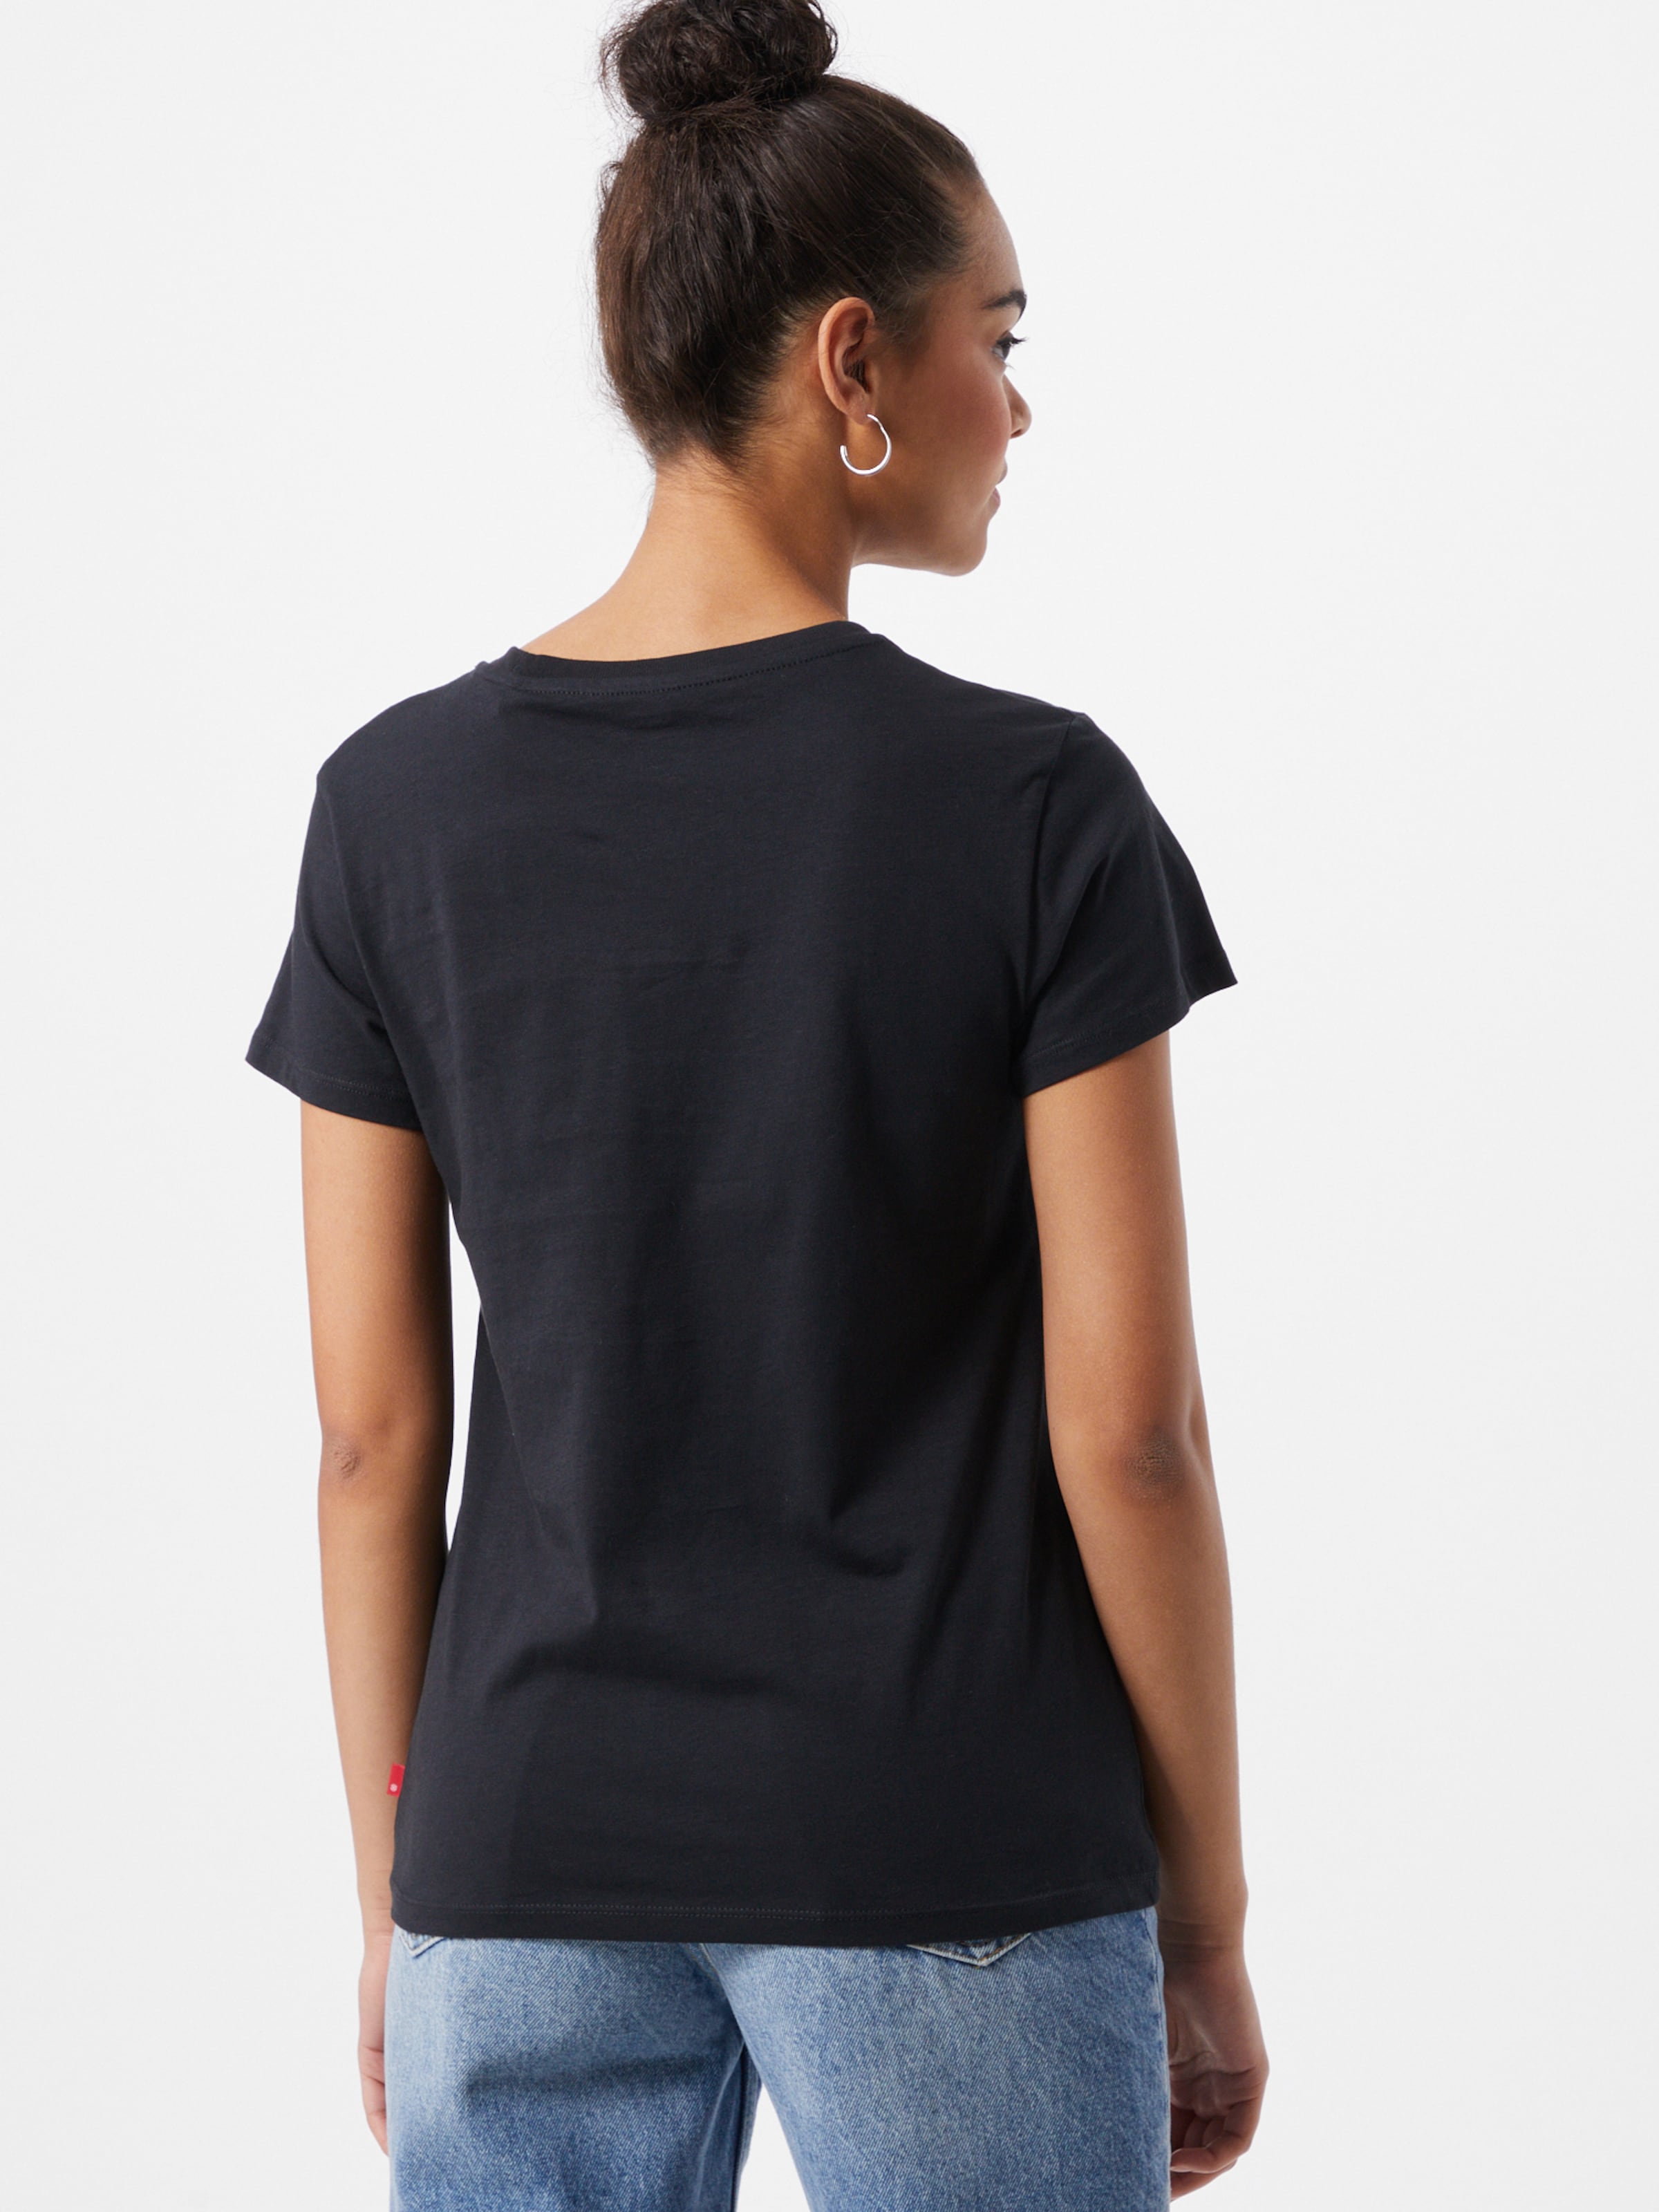 Frauen Shirts & Tops LEVI'S Shirt in Schwarz - JE42381